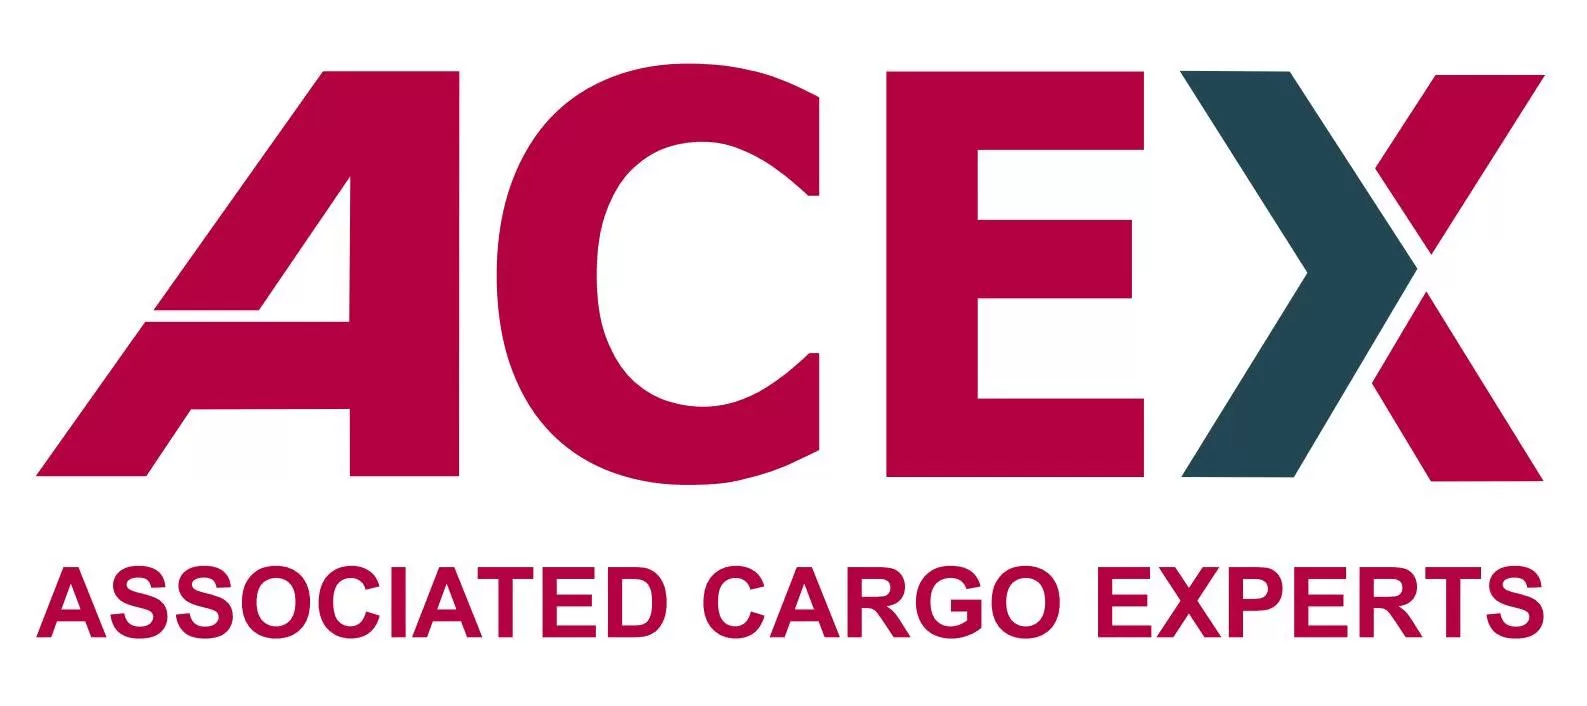 ACEX International Freight Forwarding company